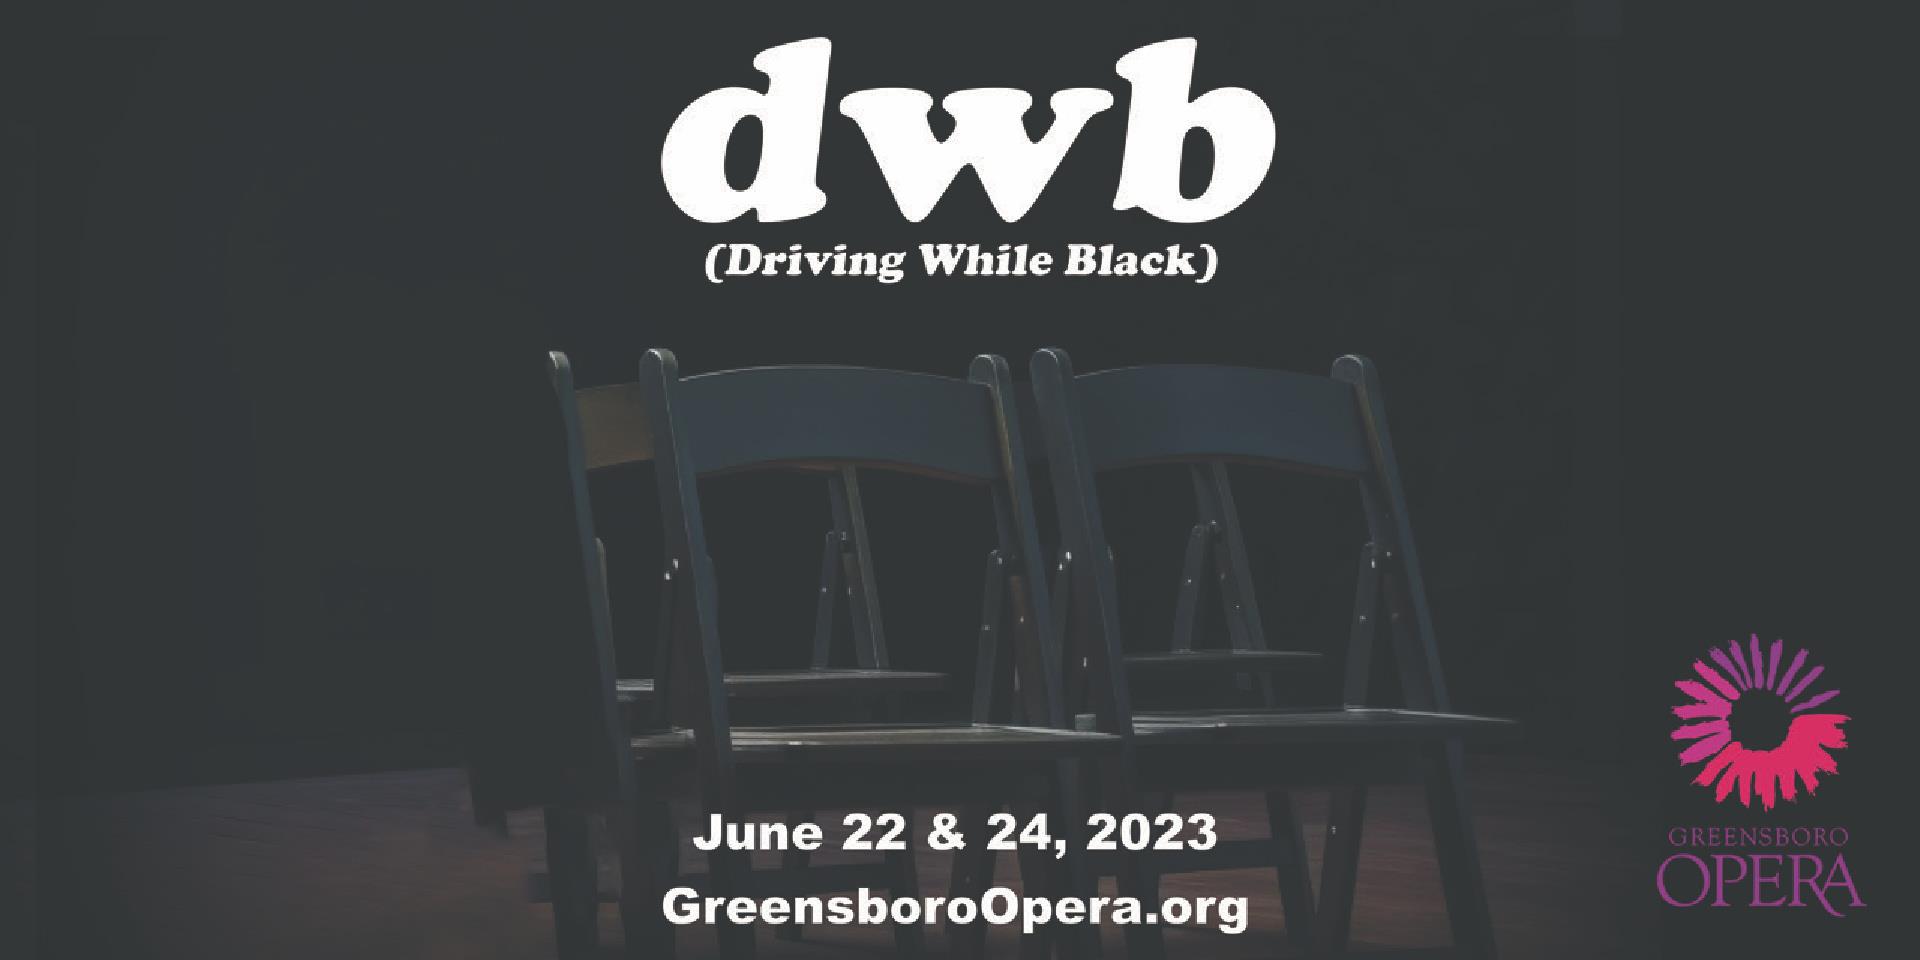 dwb (Driving While Black) - Greensboro Opera